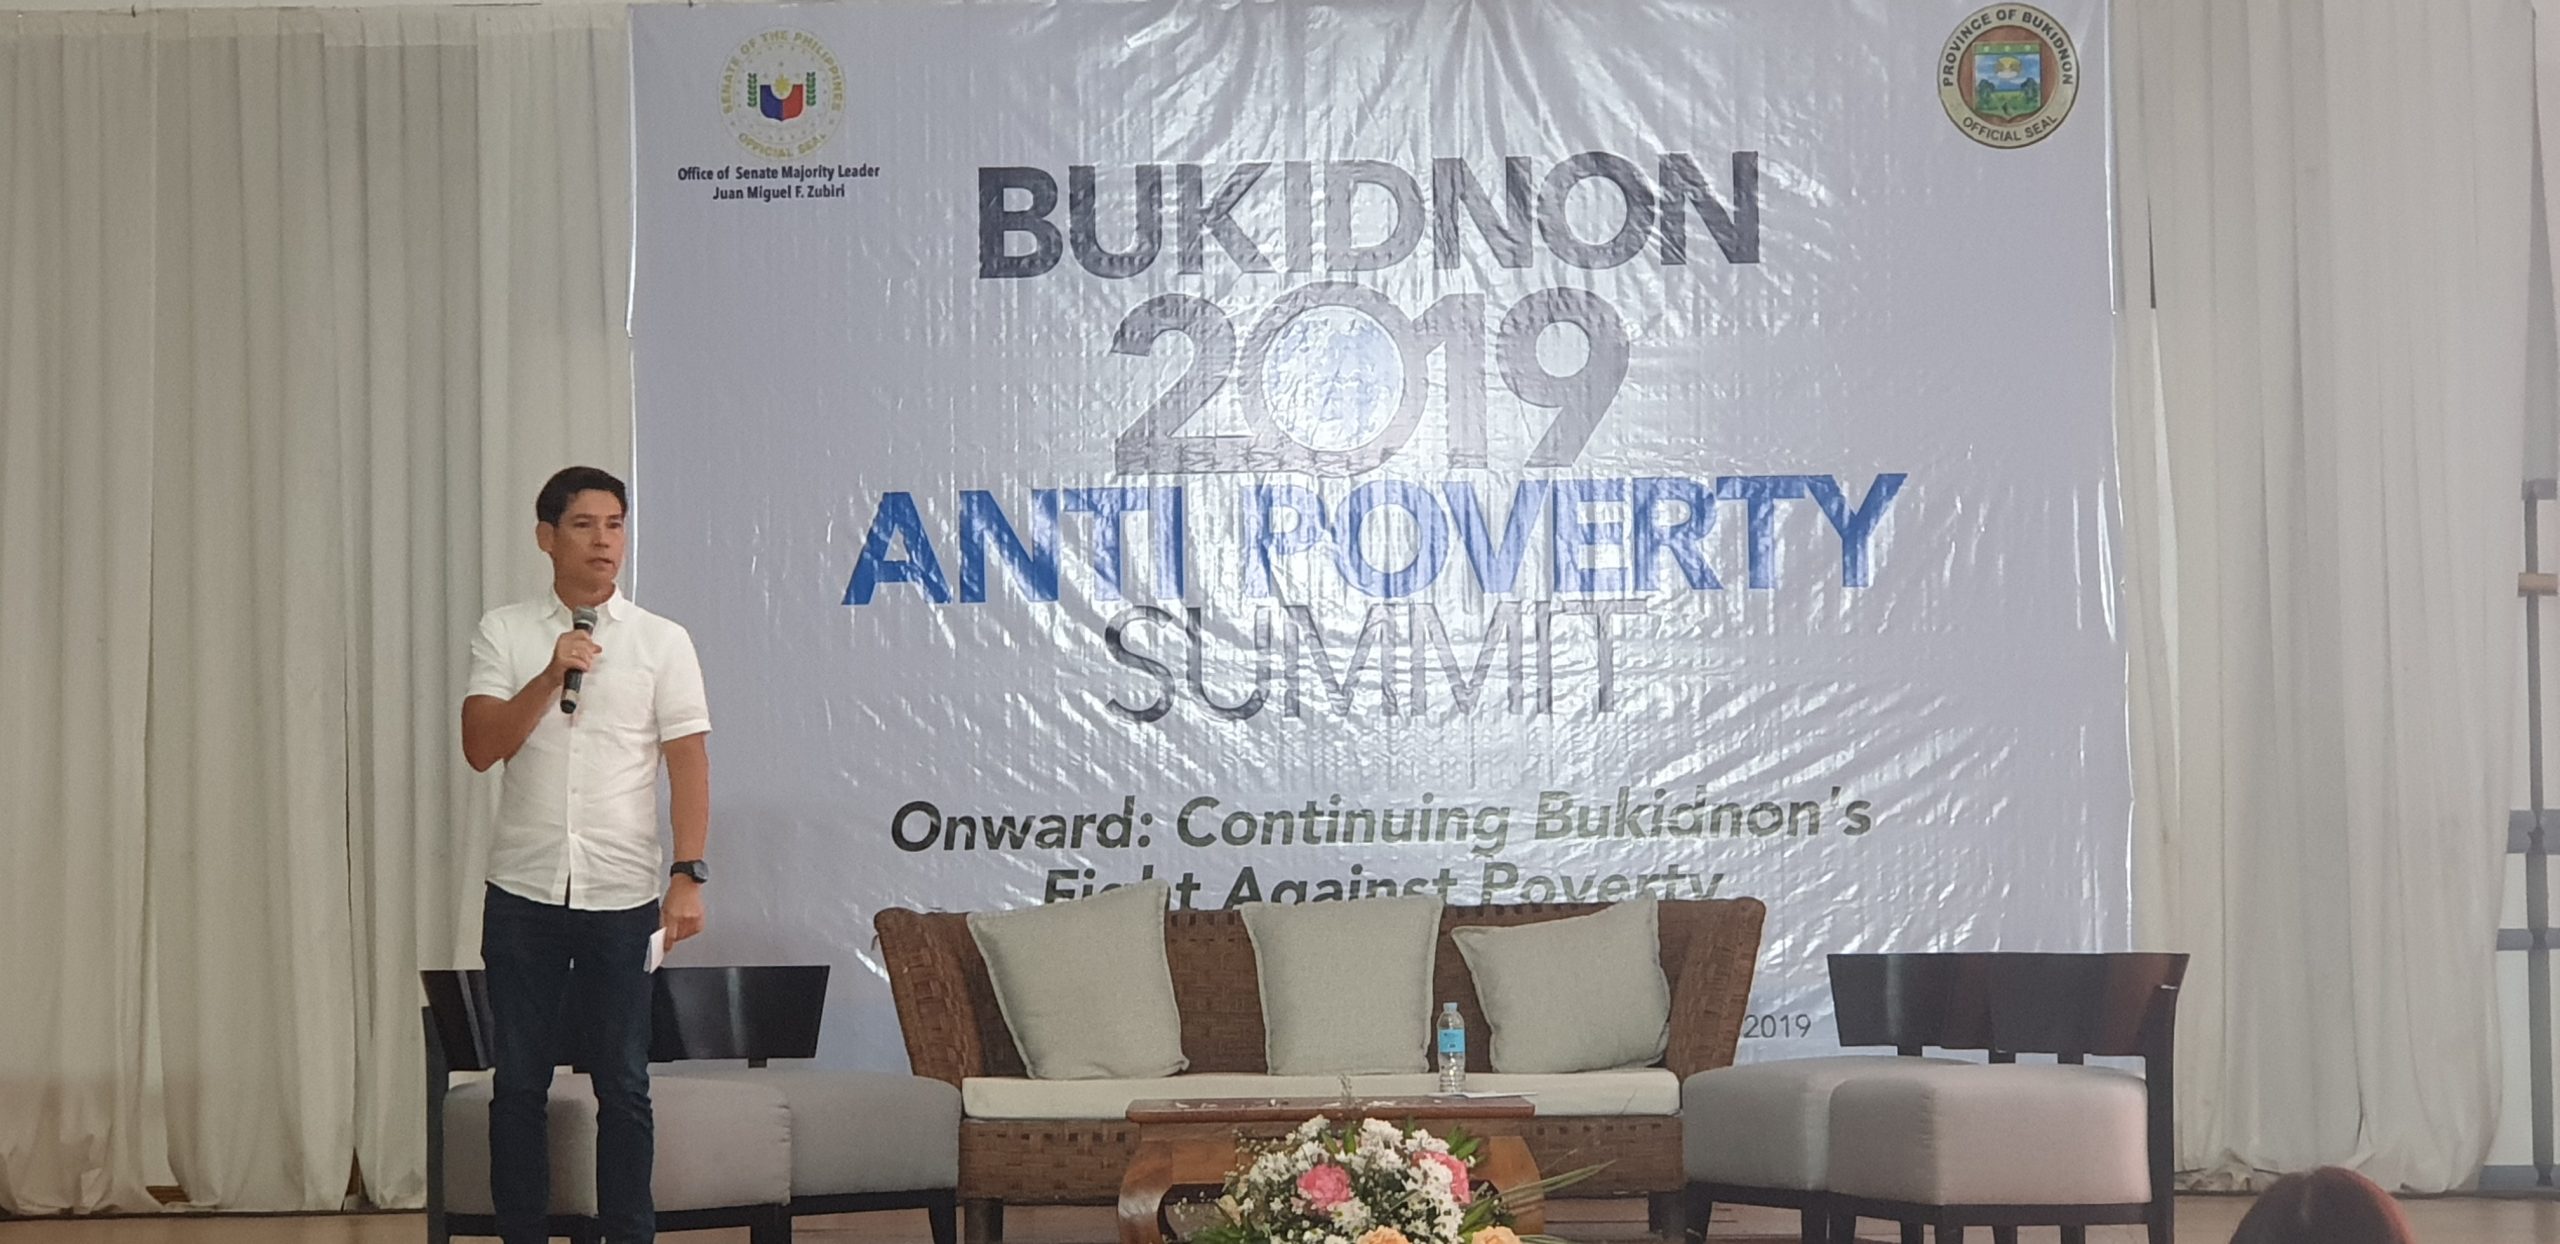 Bukidnon Governor and congressman son also under self-quarantine